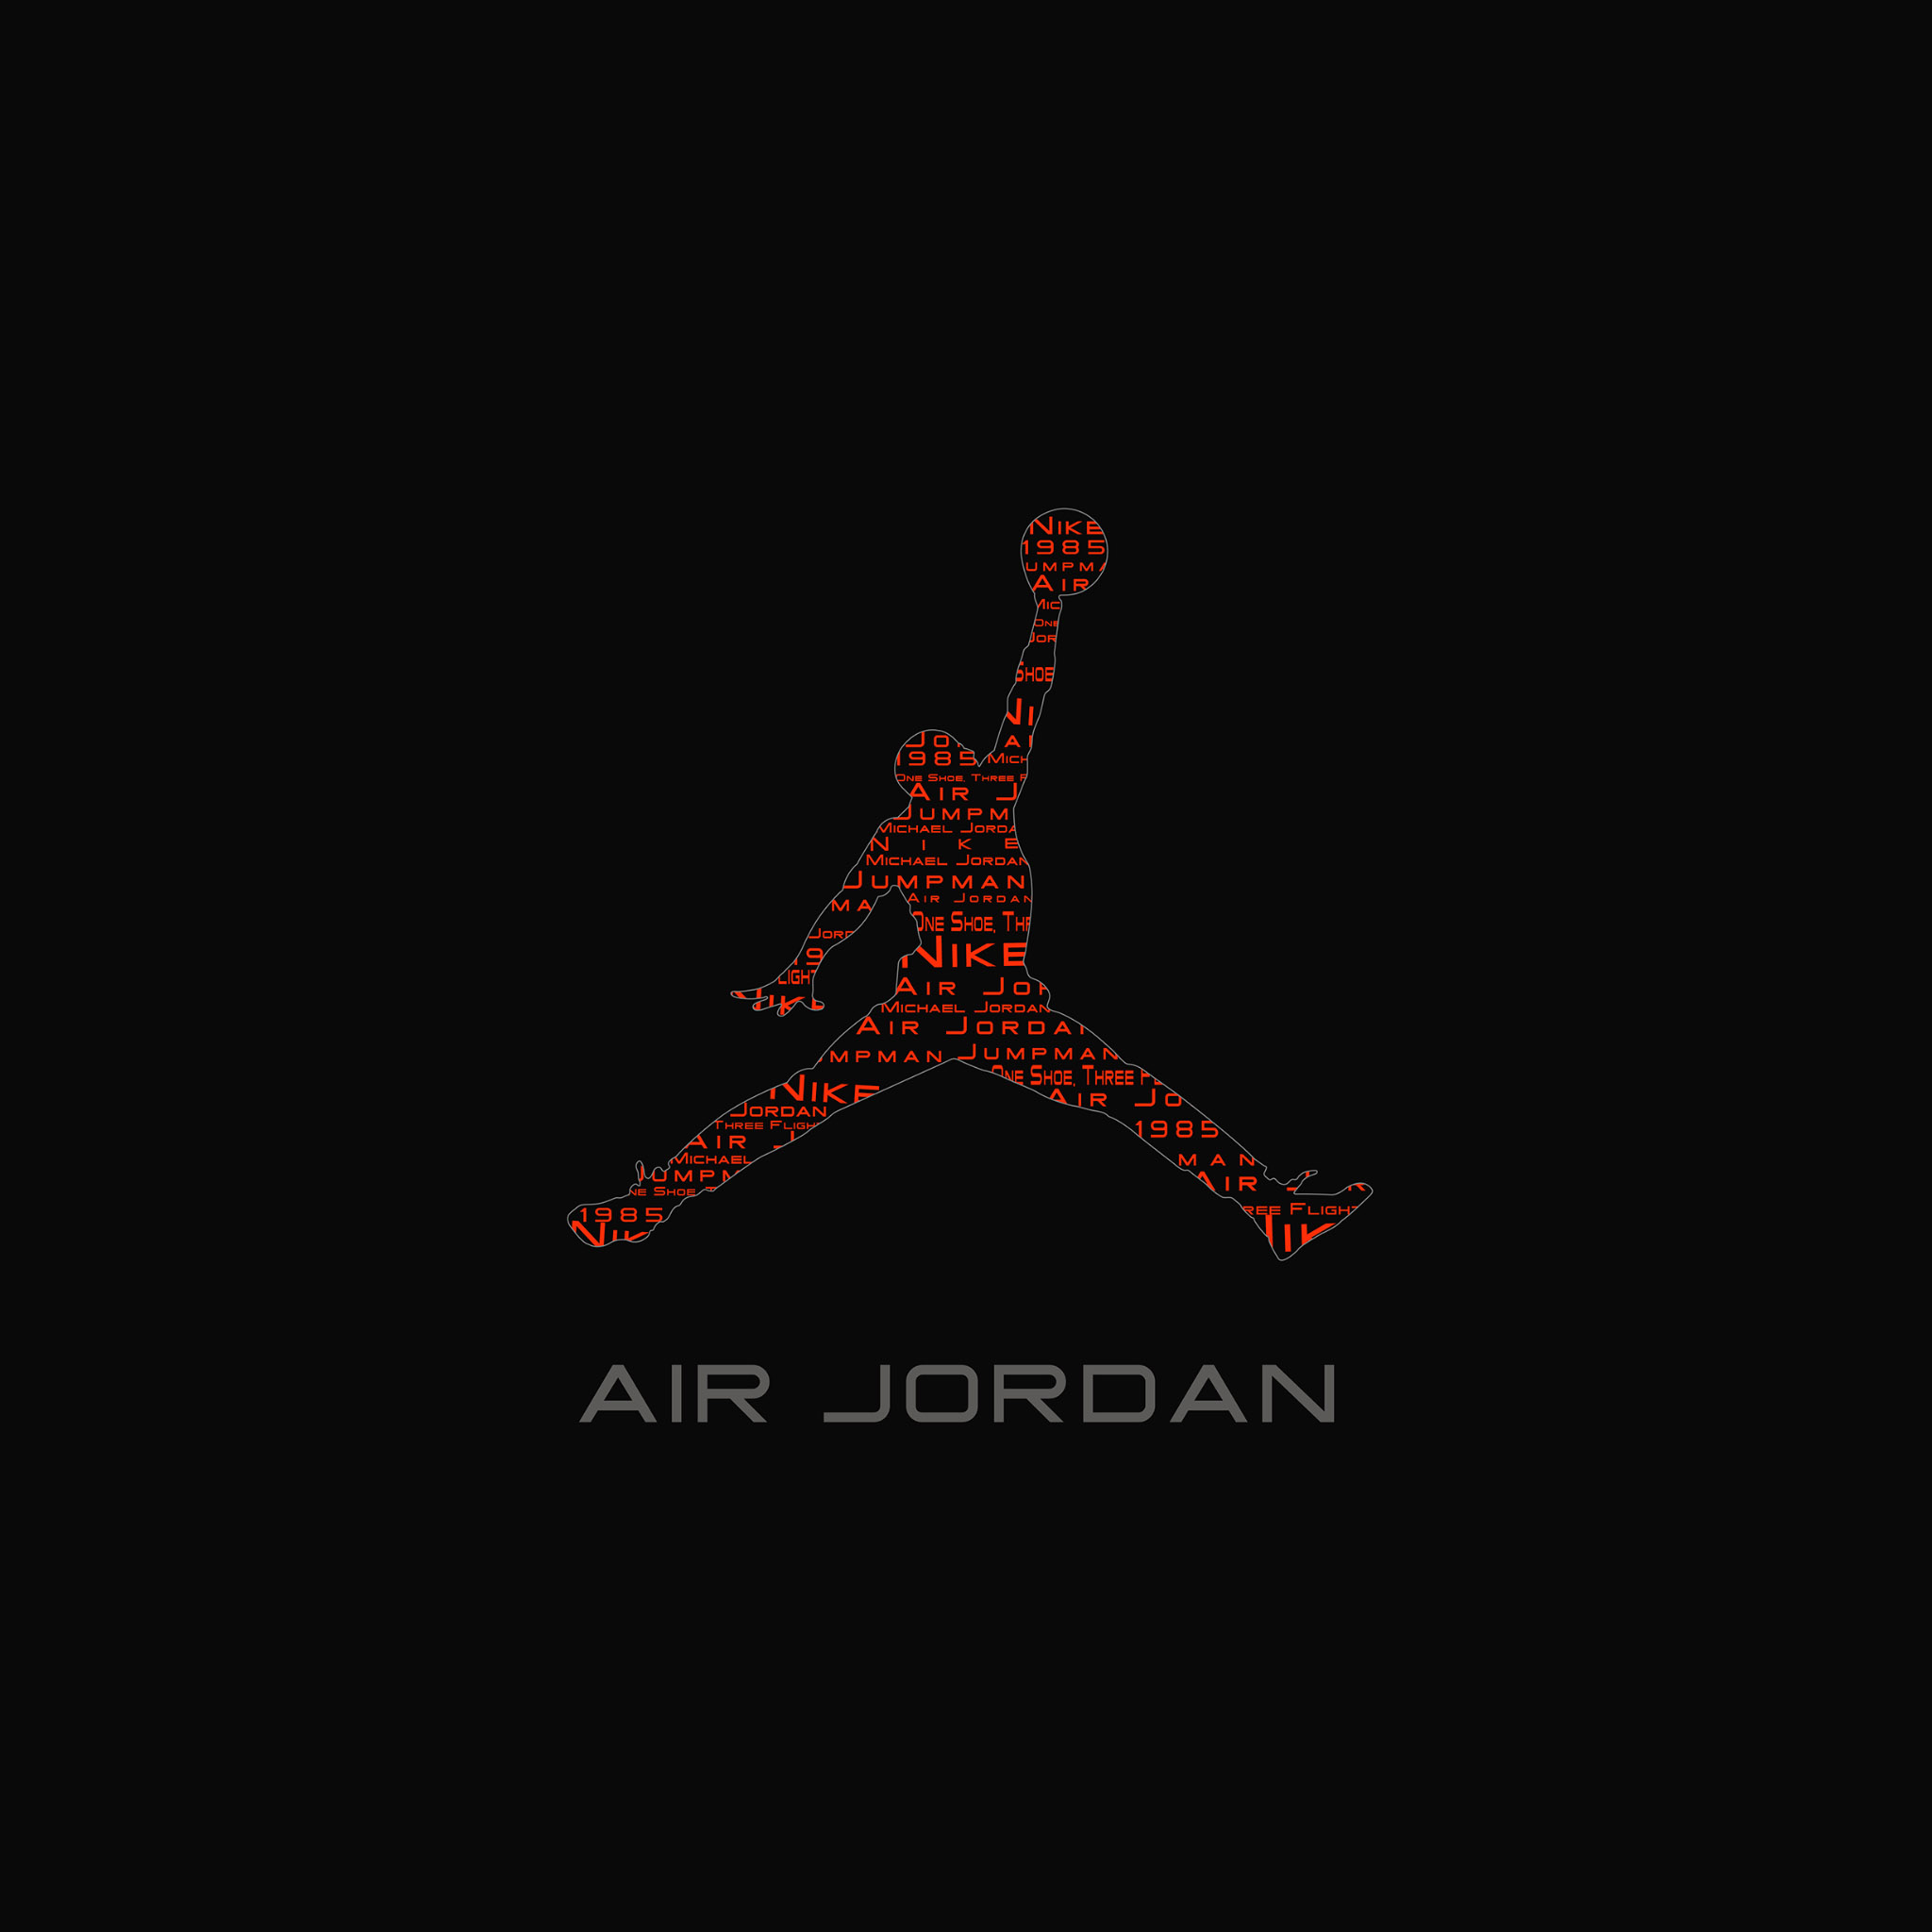 3Wallpapers for iPhone on Twitter iPhone Wallpaper Jordan  Jordan shoes   Download in HD gt httpstco8Ci7EIlaSV httpstcozF72XXI3Qn   Twitter